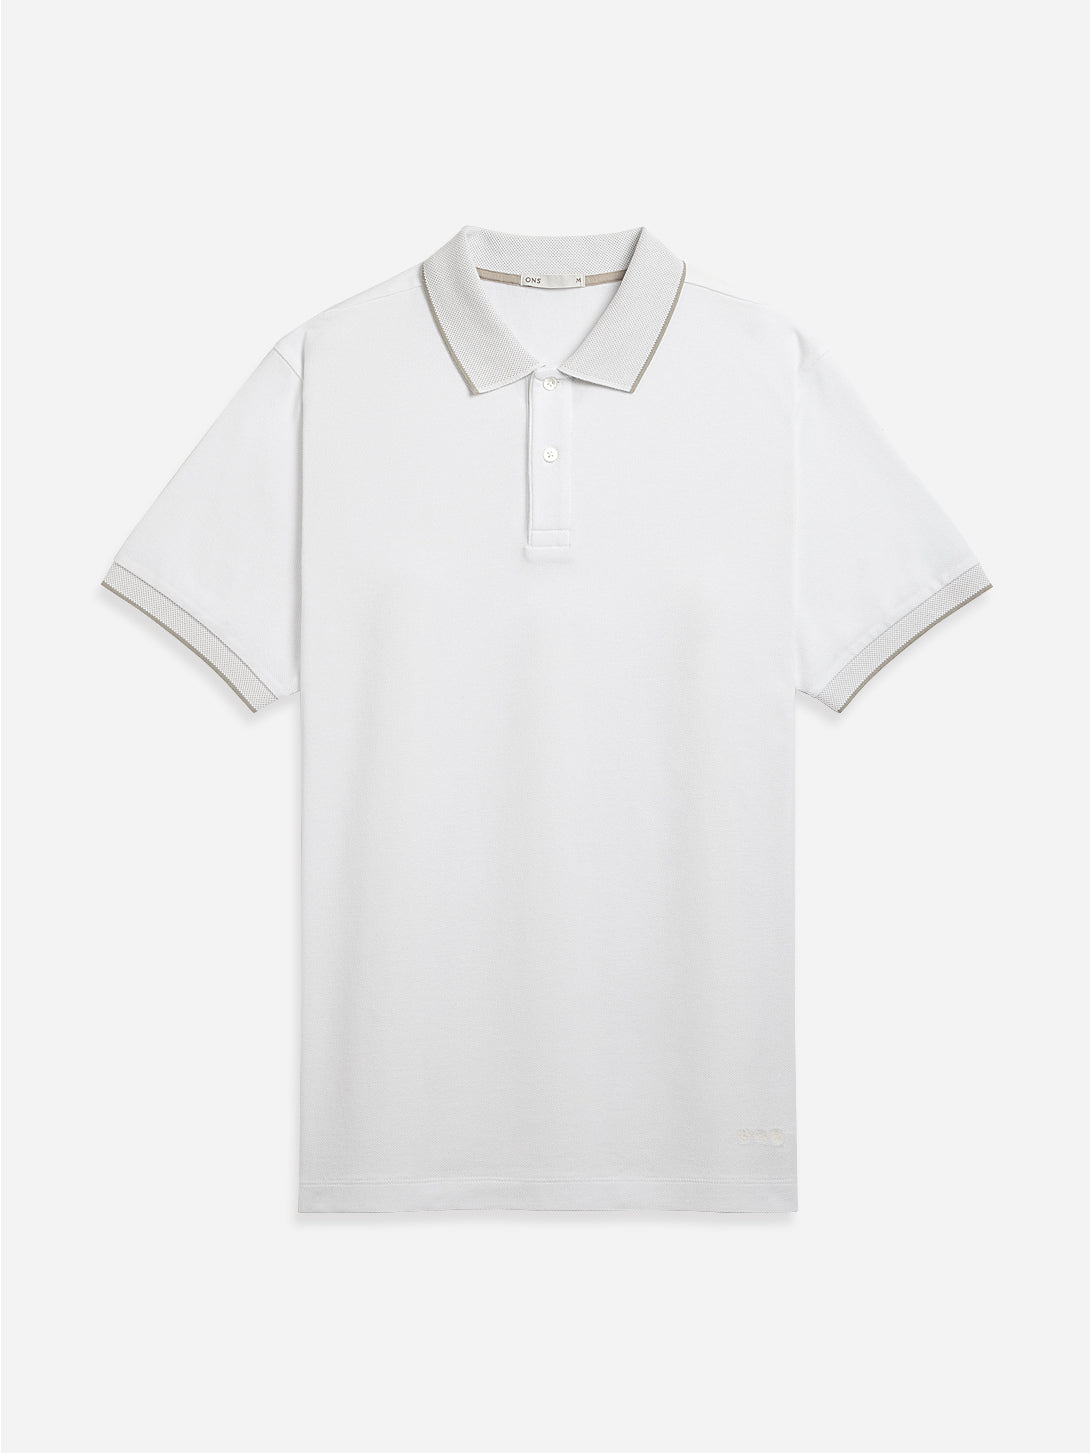 Bright White Bennett Pique Polo Mens Seasonal Shirt Two Toned